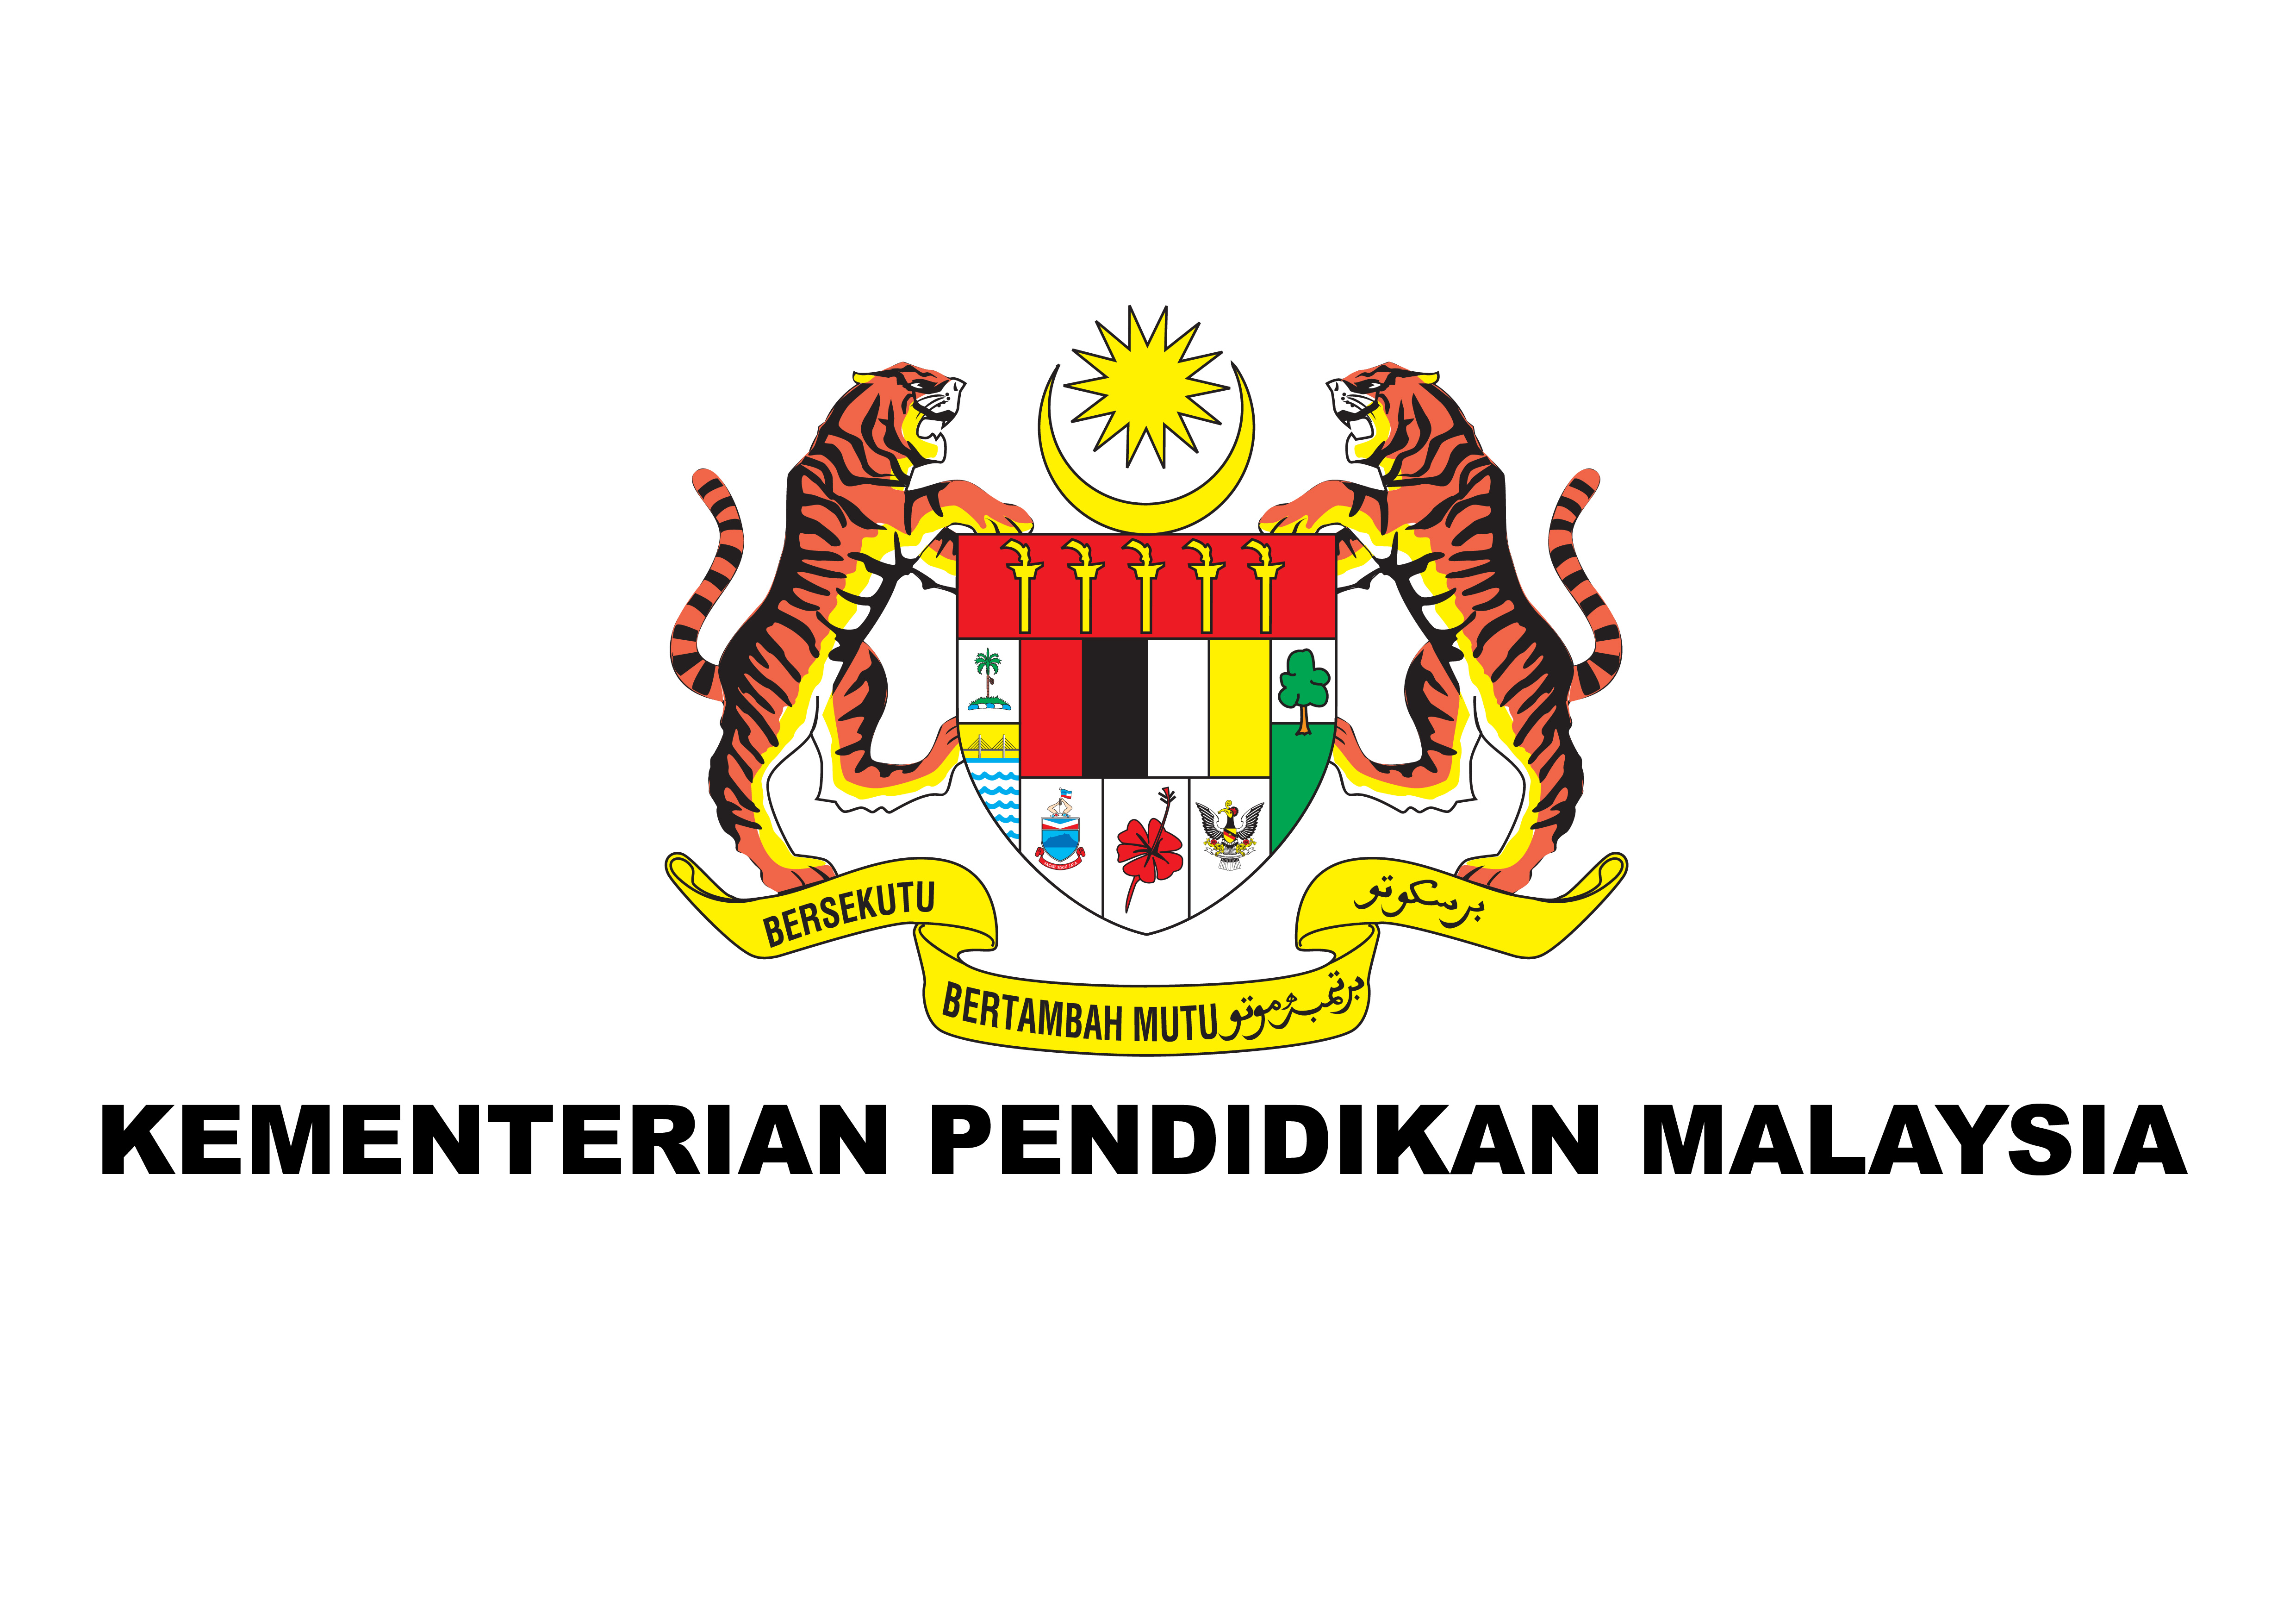 Image logo kementerian pendidikan malaysia